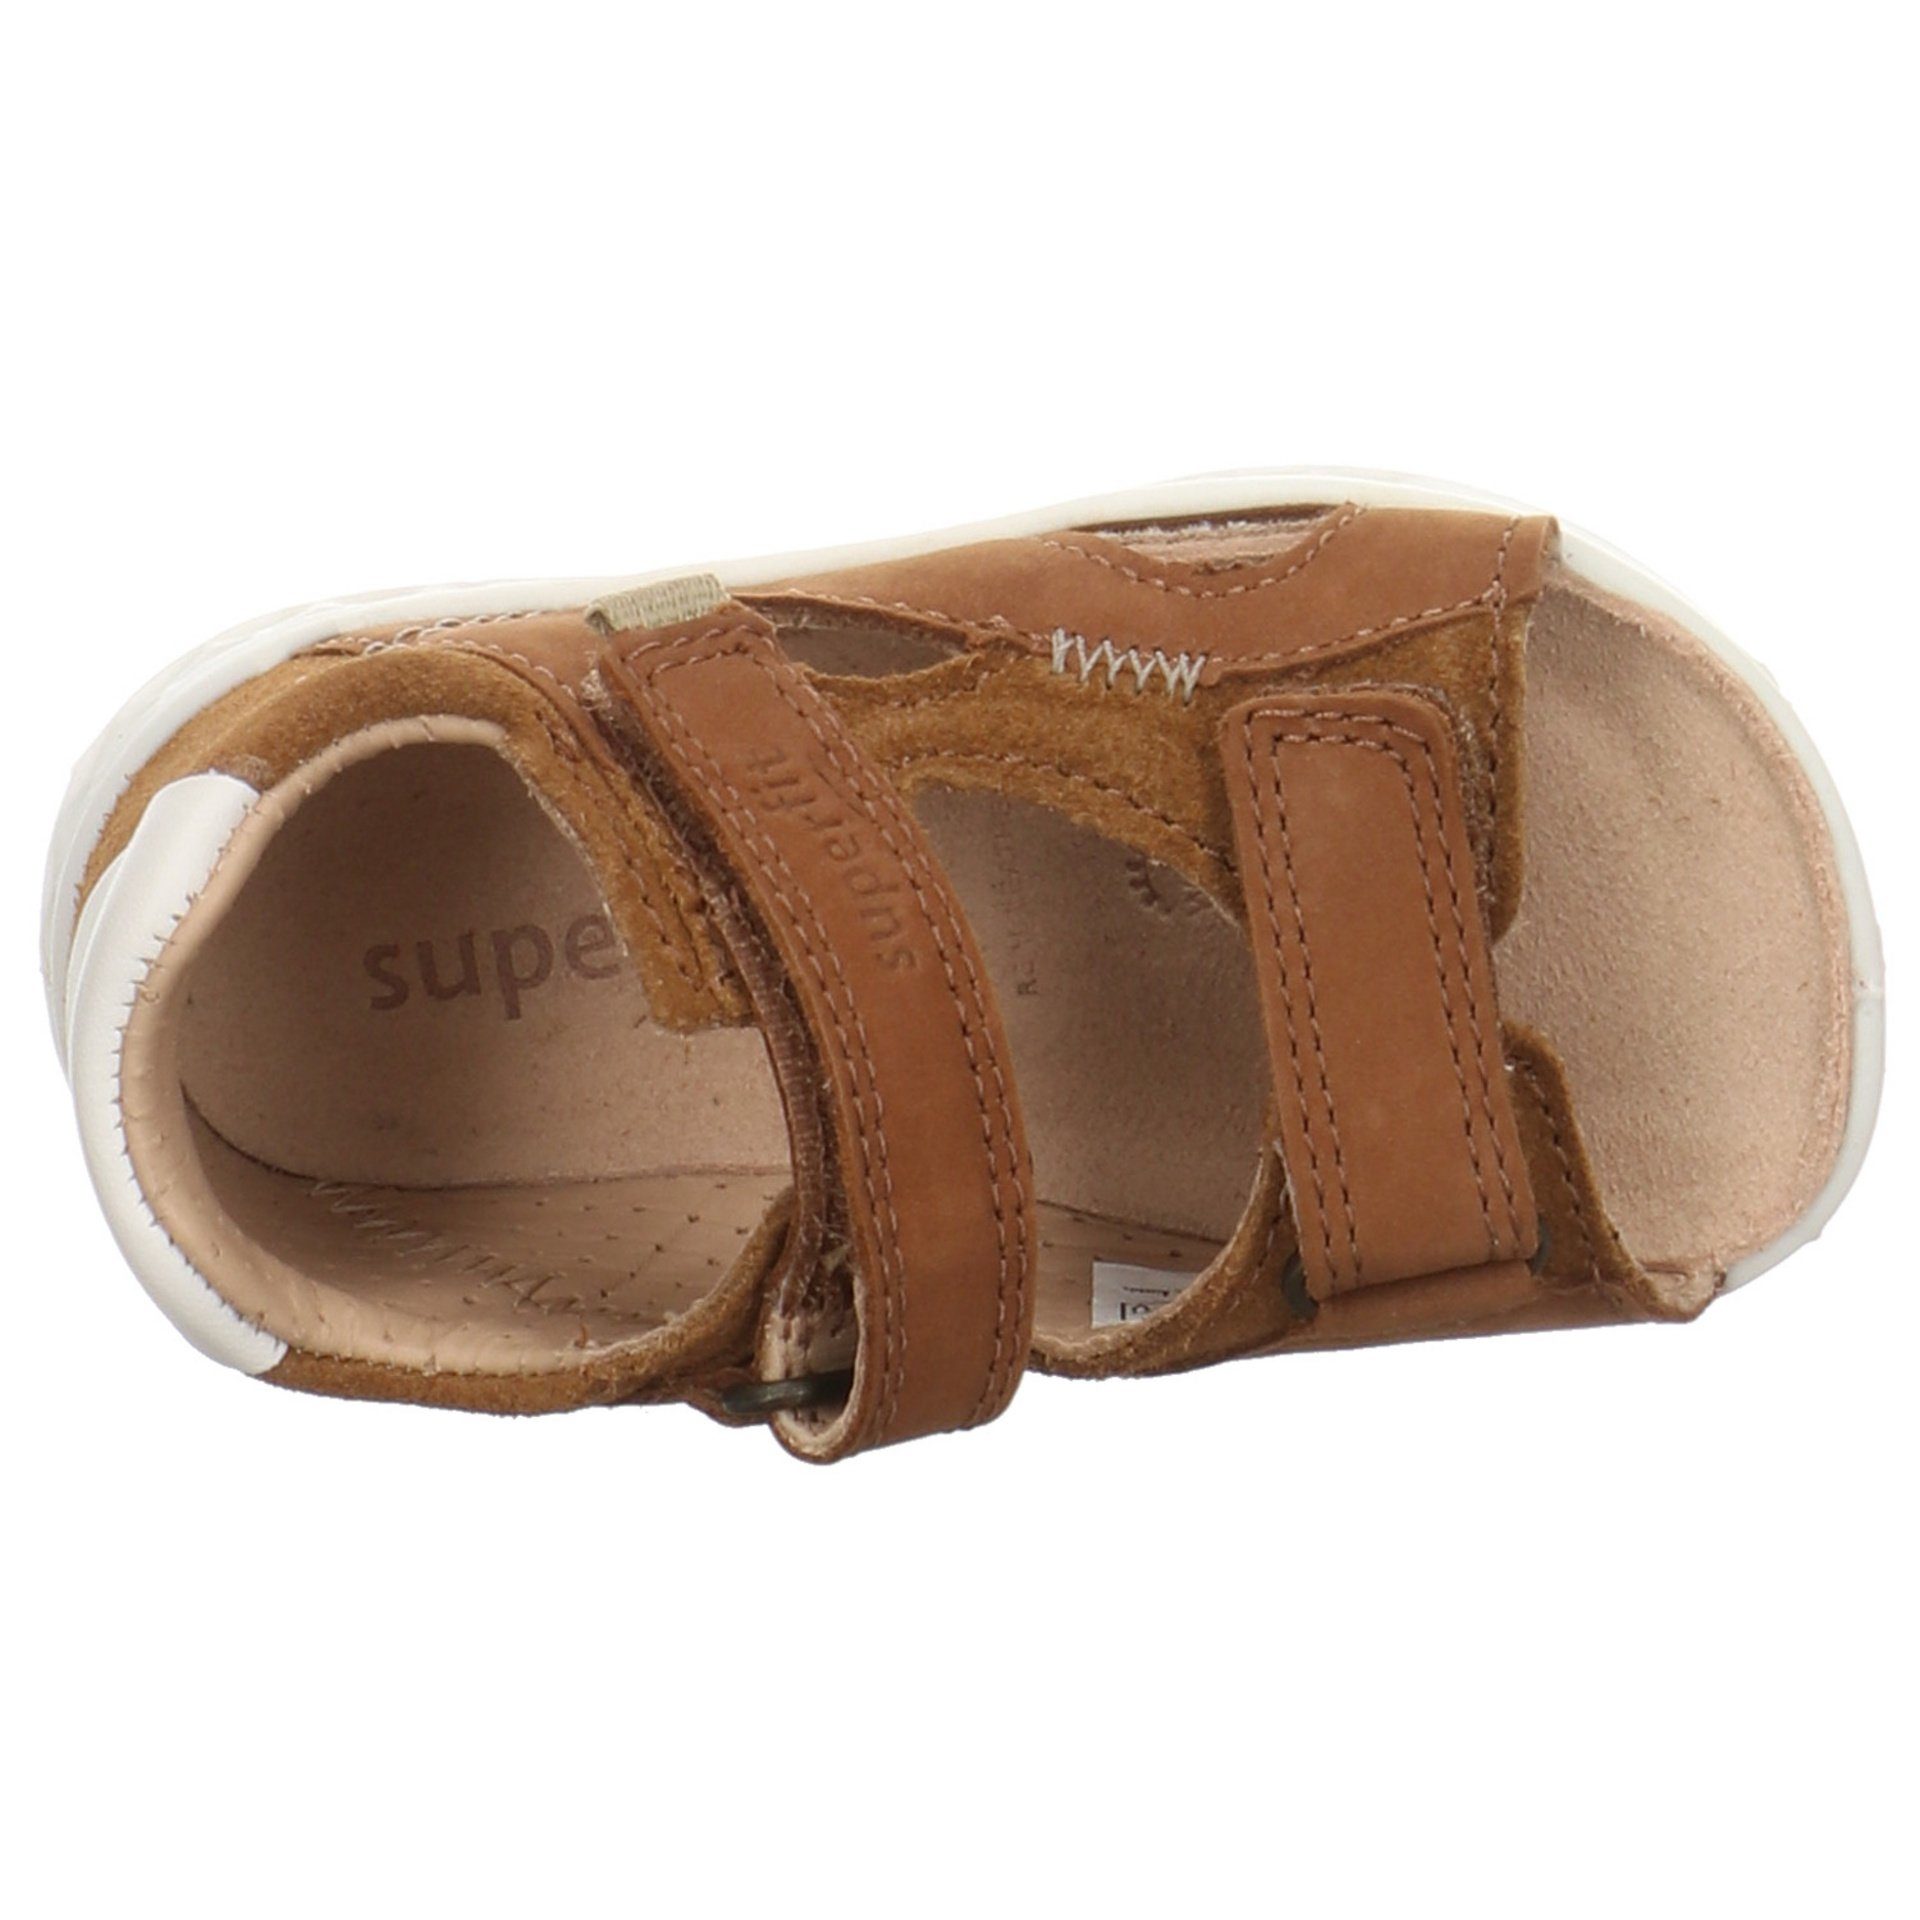 Superfit Jungen Sandalen Sandale Kinderschuhe BRAUN/BEIGE Sandale Lederkombination Schuhe Lagoon